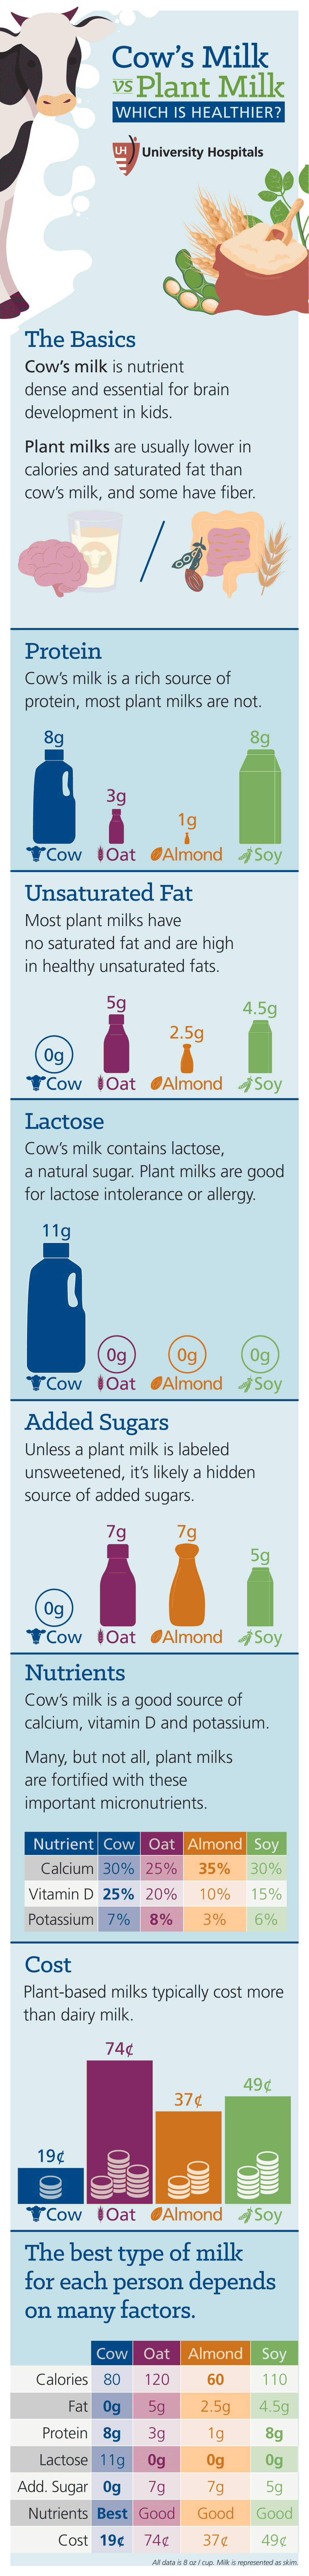 Infographic: Cow’s Milk versus Plant Milk: Which is Healthier?